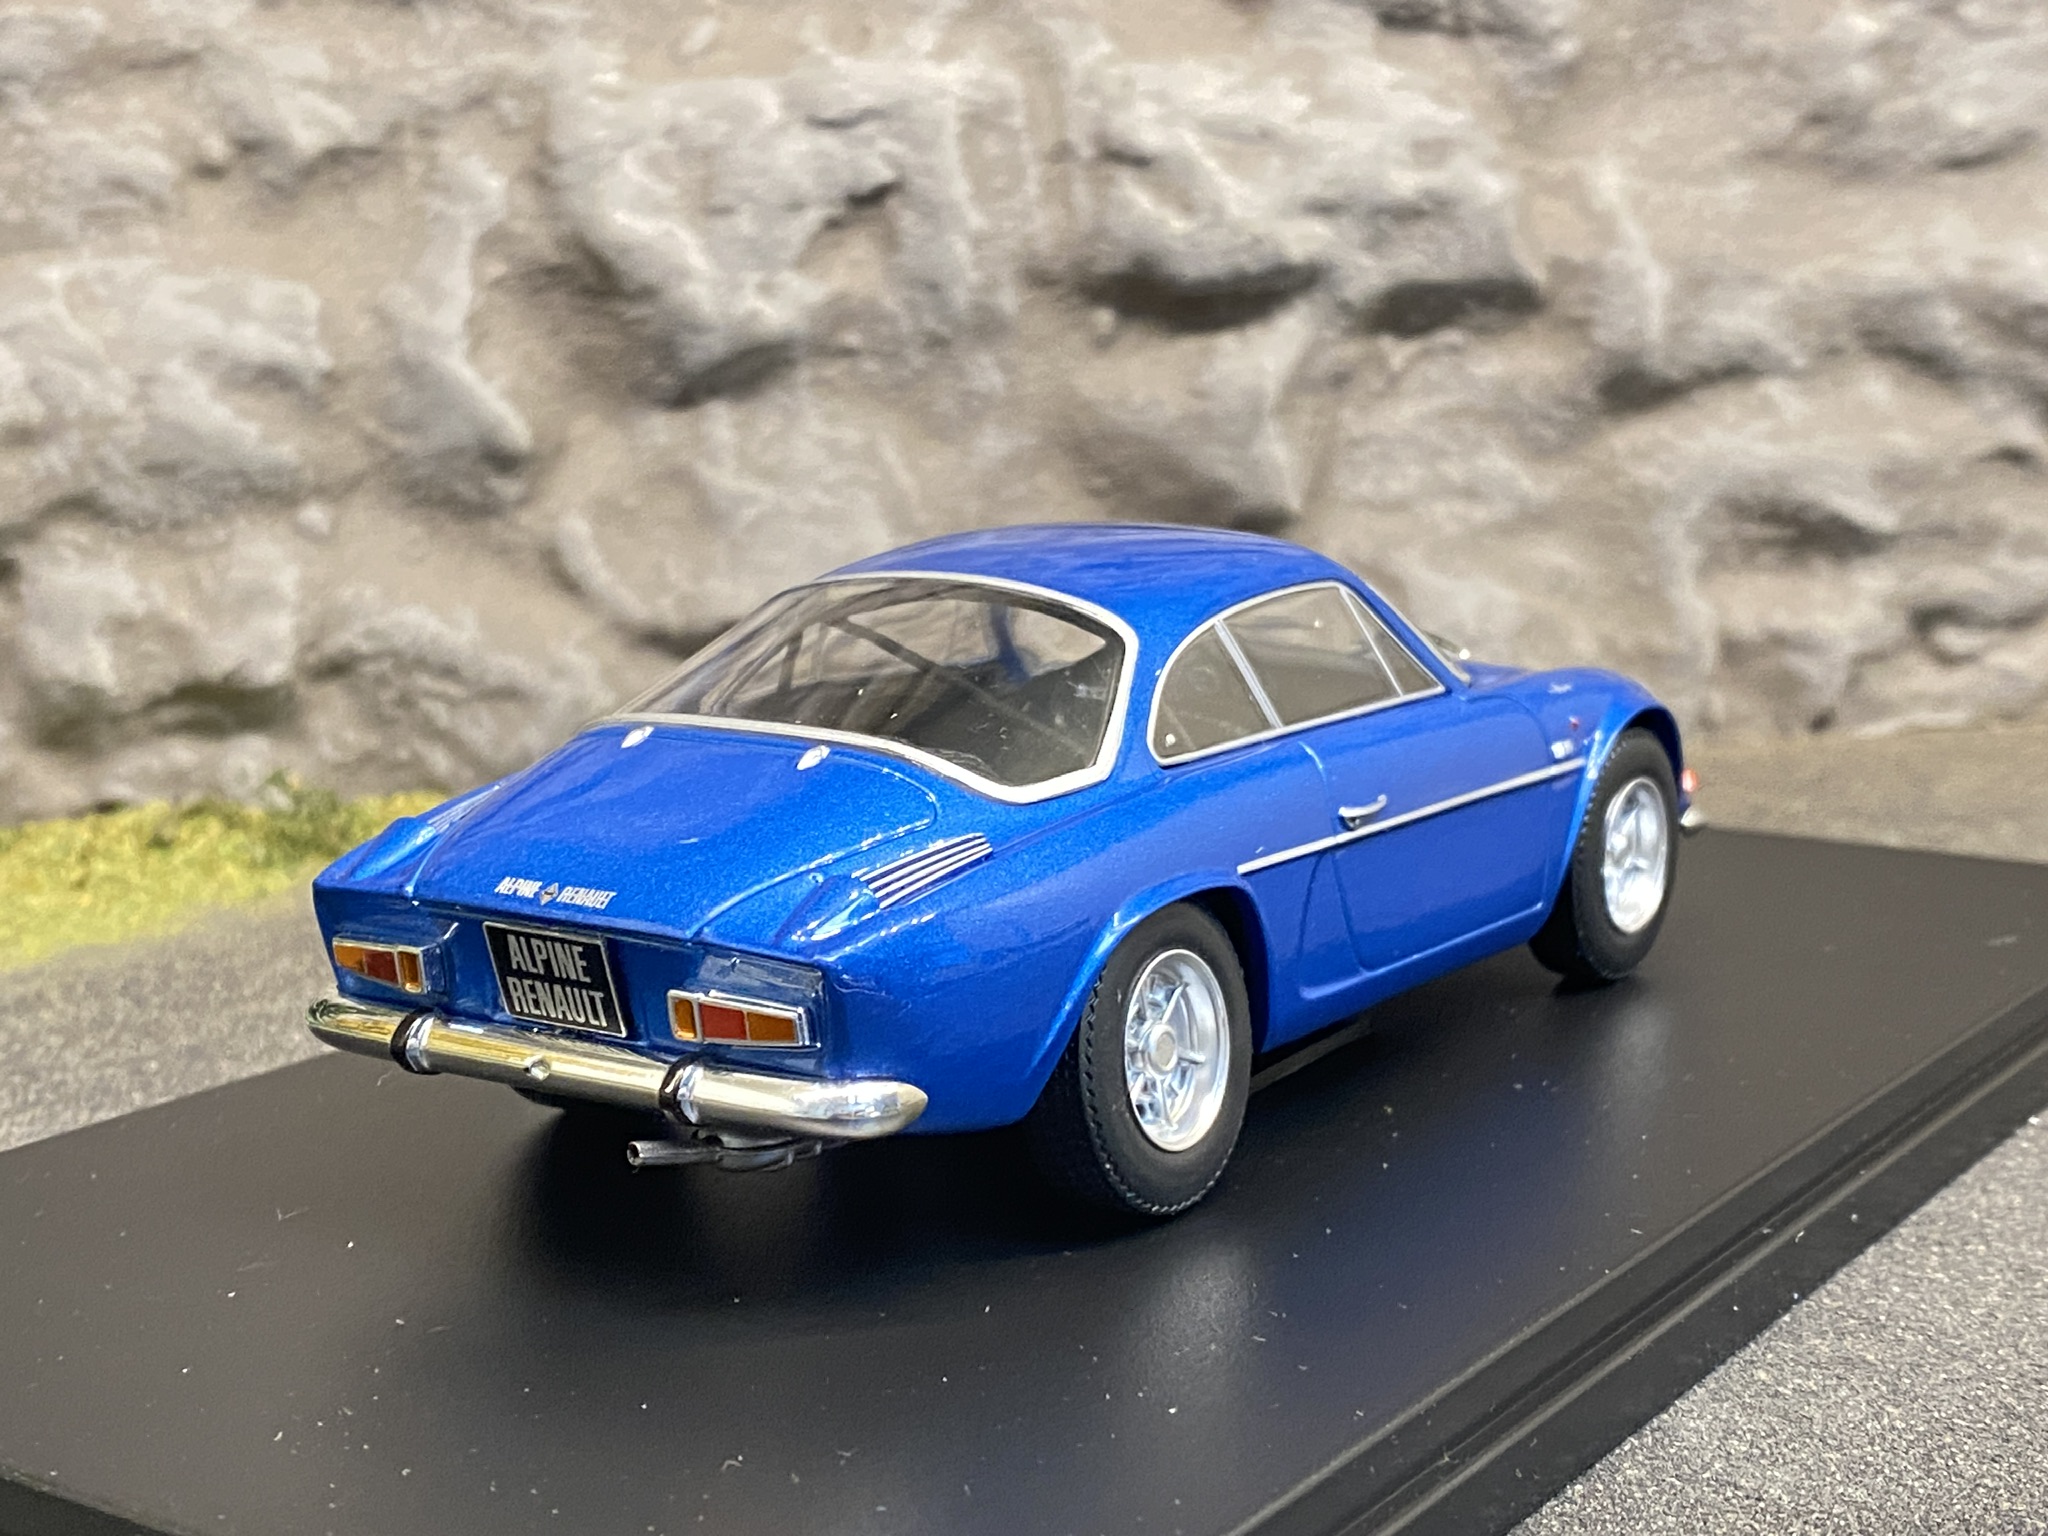 Skala 1/24 Alpine Renault A110 1300, Blå metallic från WhiteBox